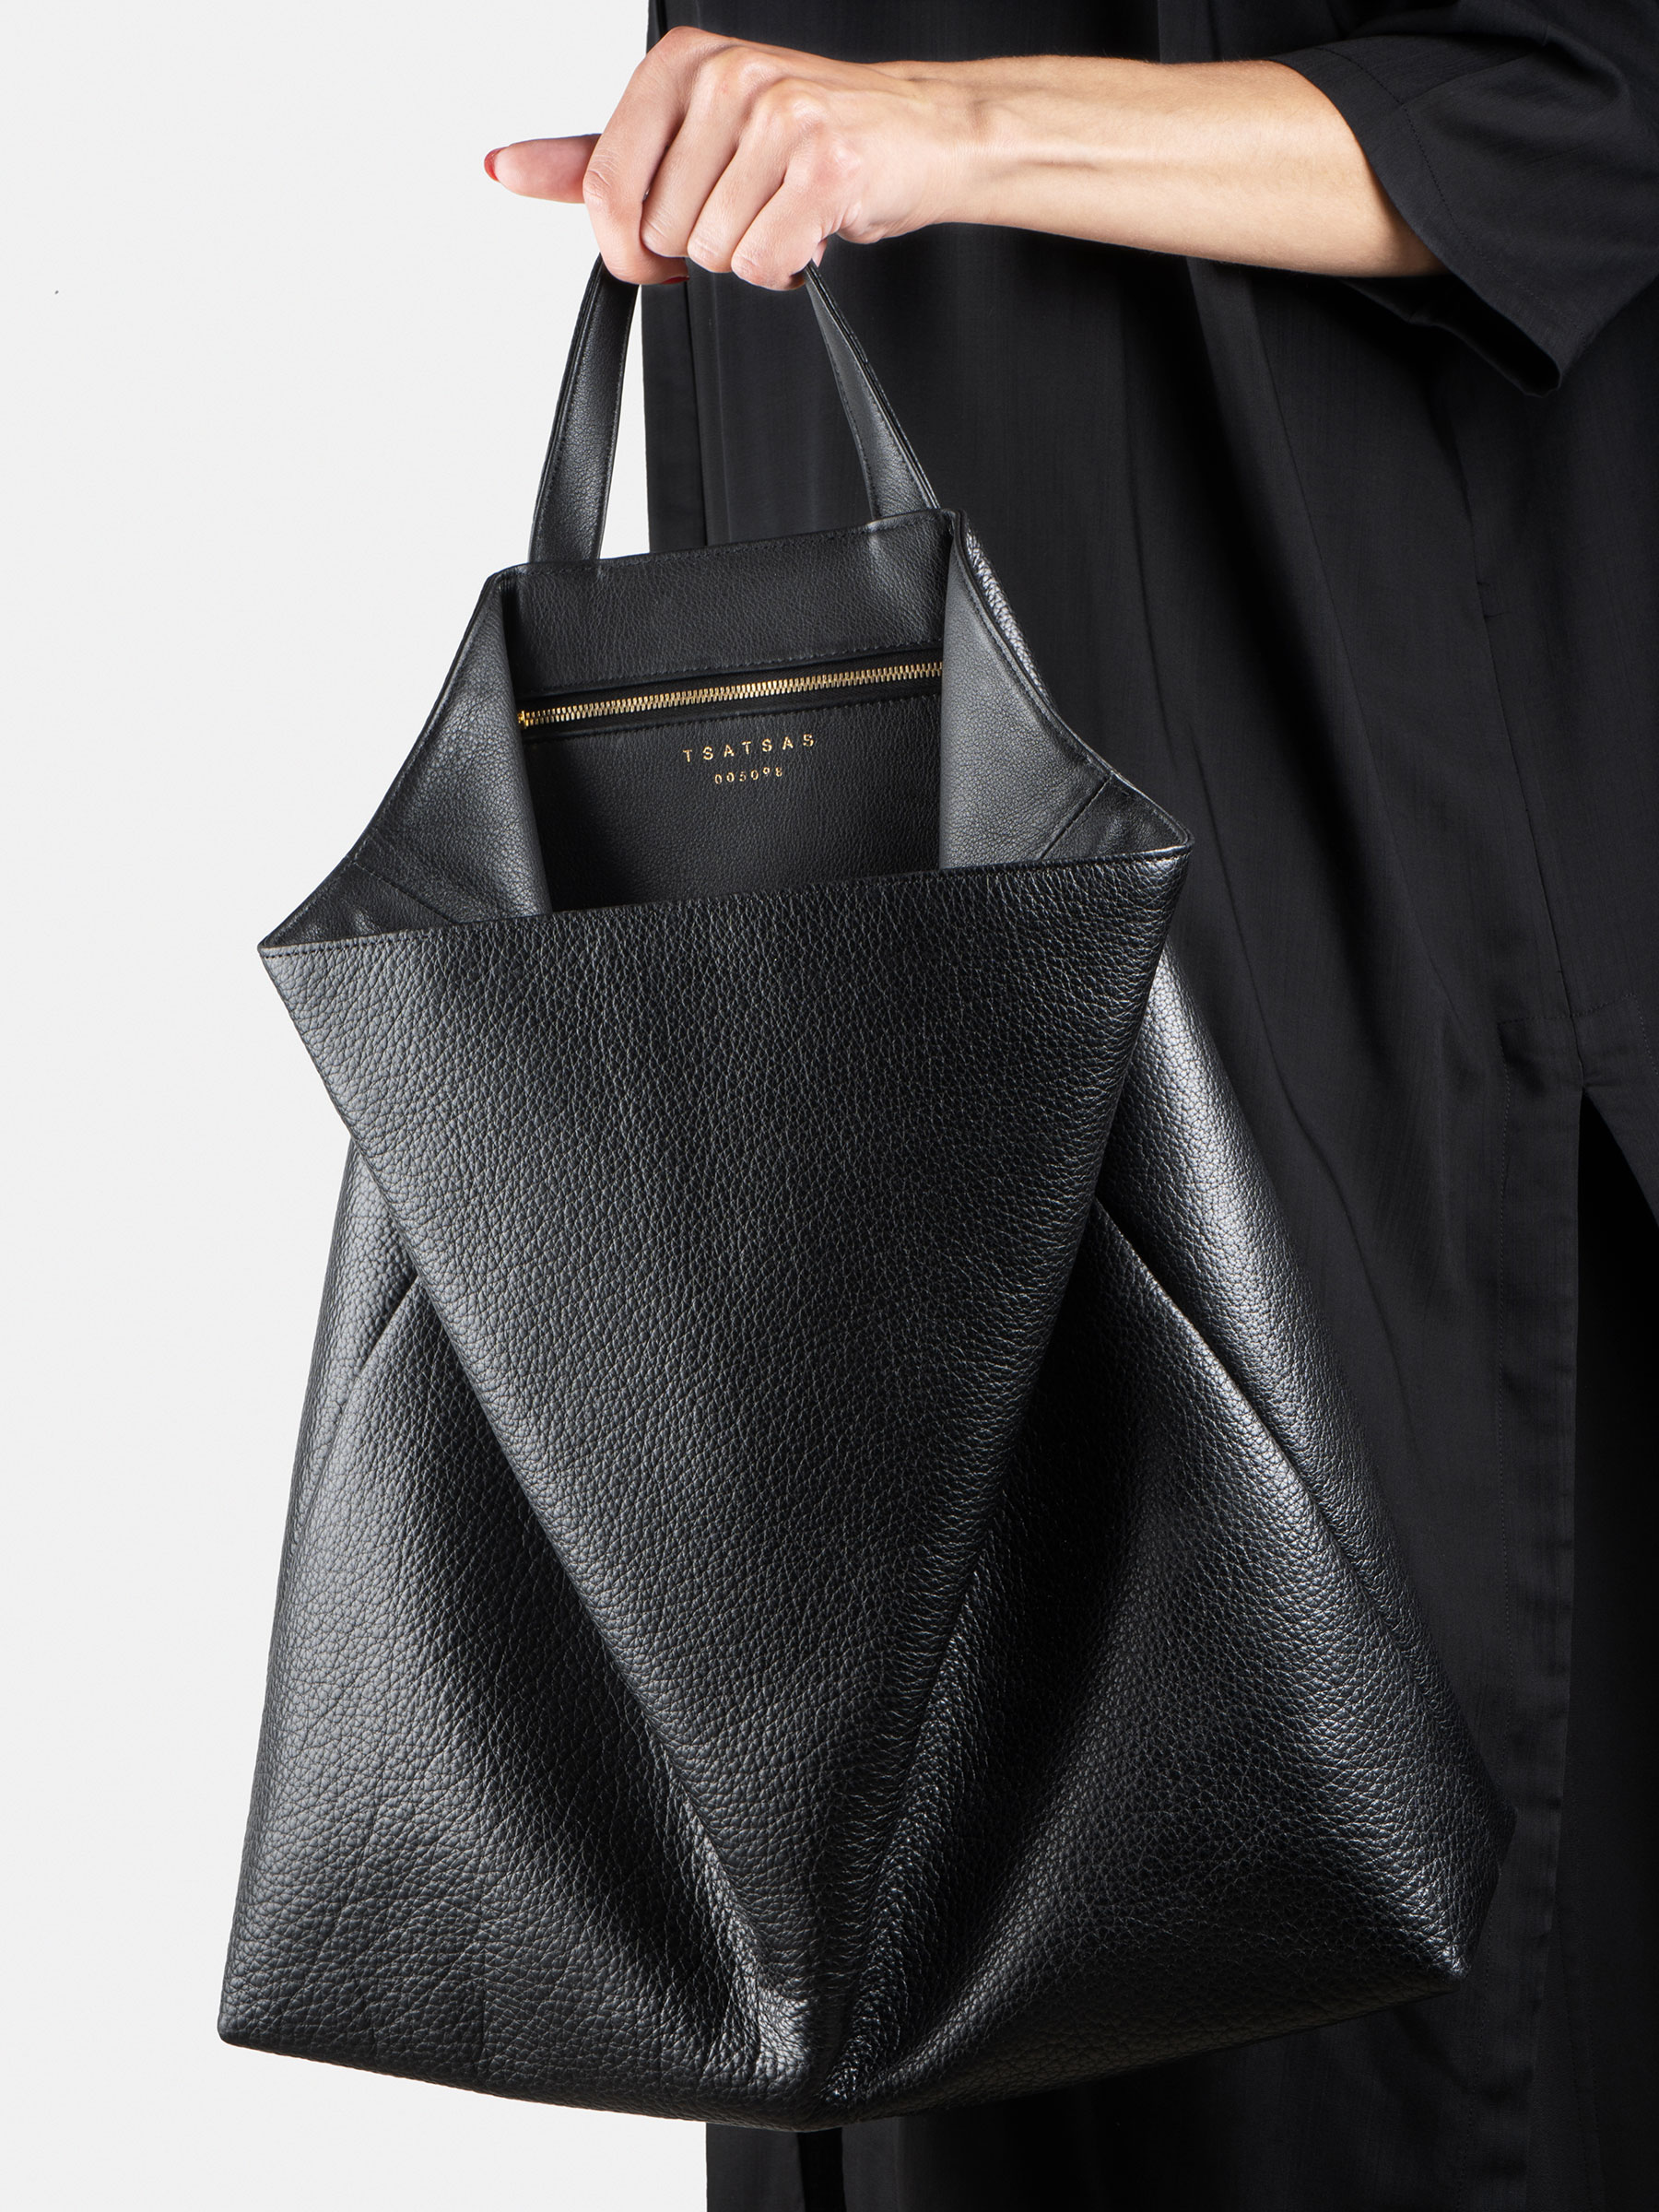 FLUKE tote bag in black bison leather | TSATSAS